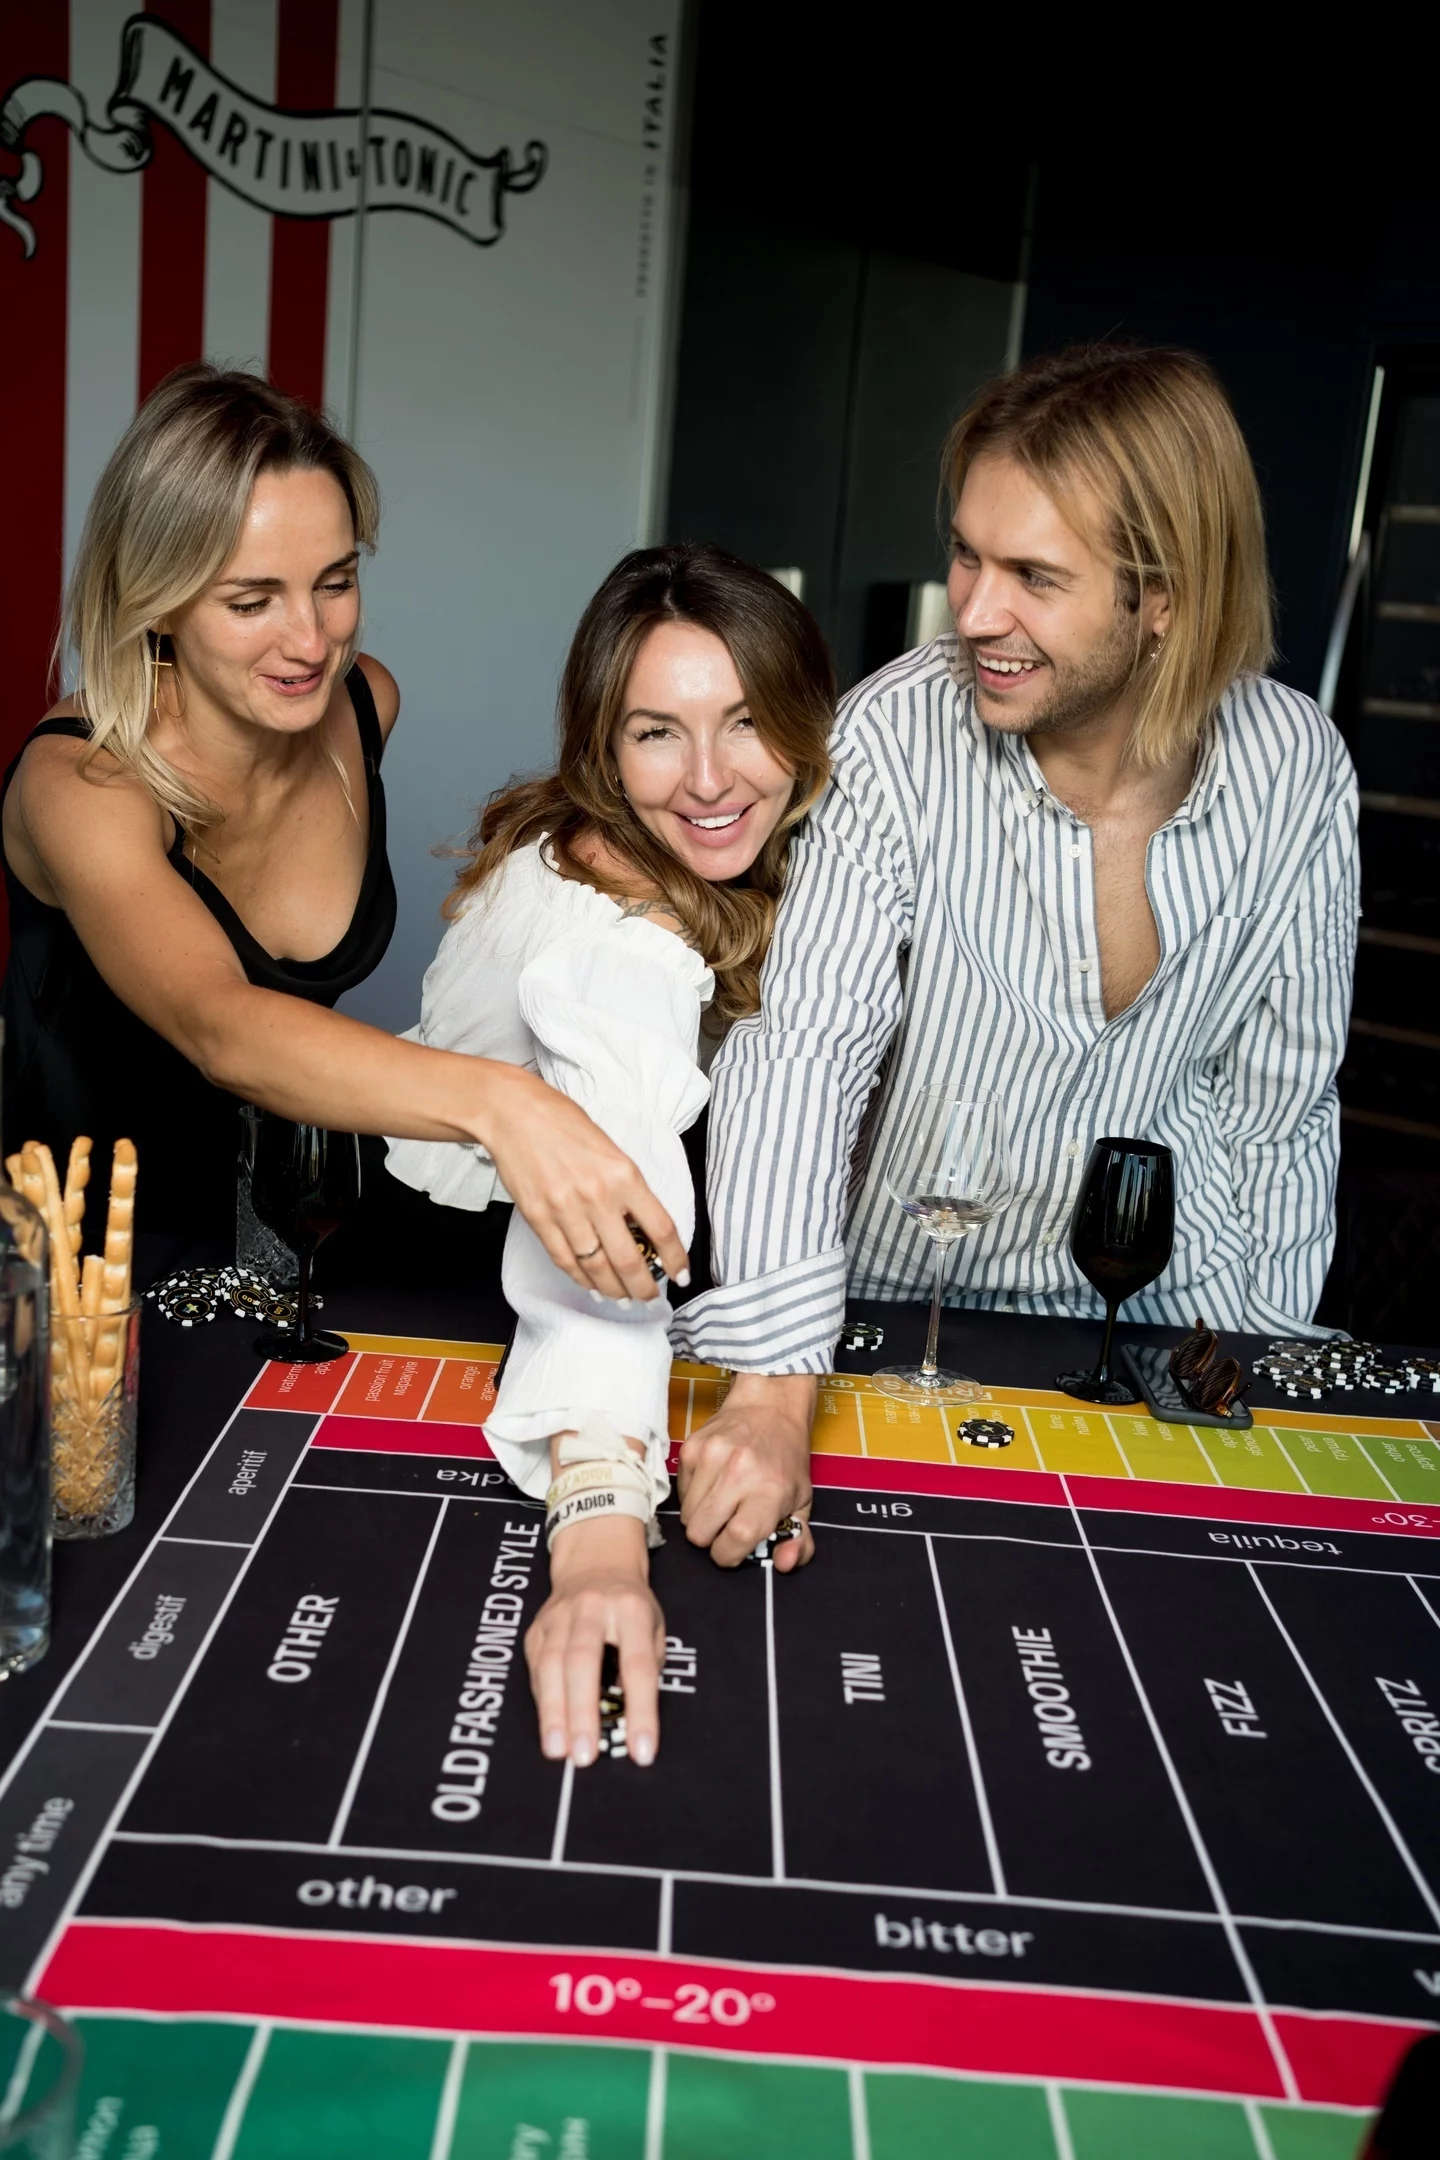 Корпоративы в стиле казино: ставки, коктейли и азарт